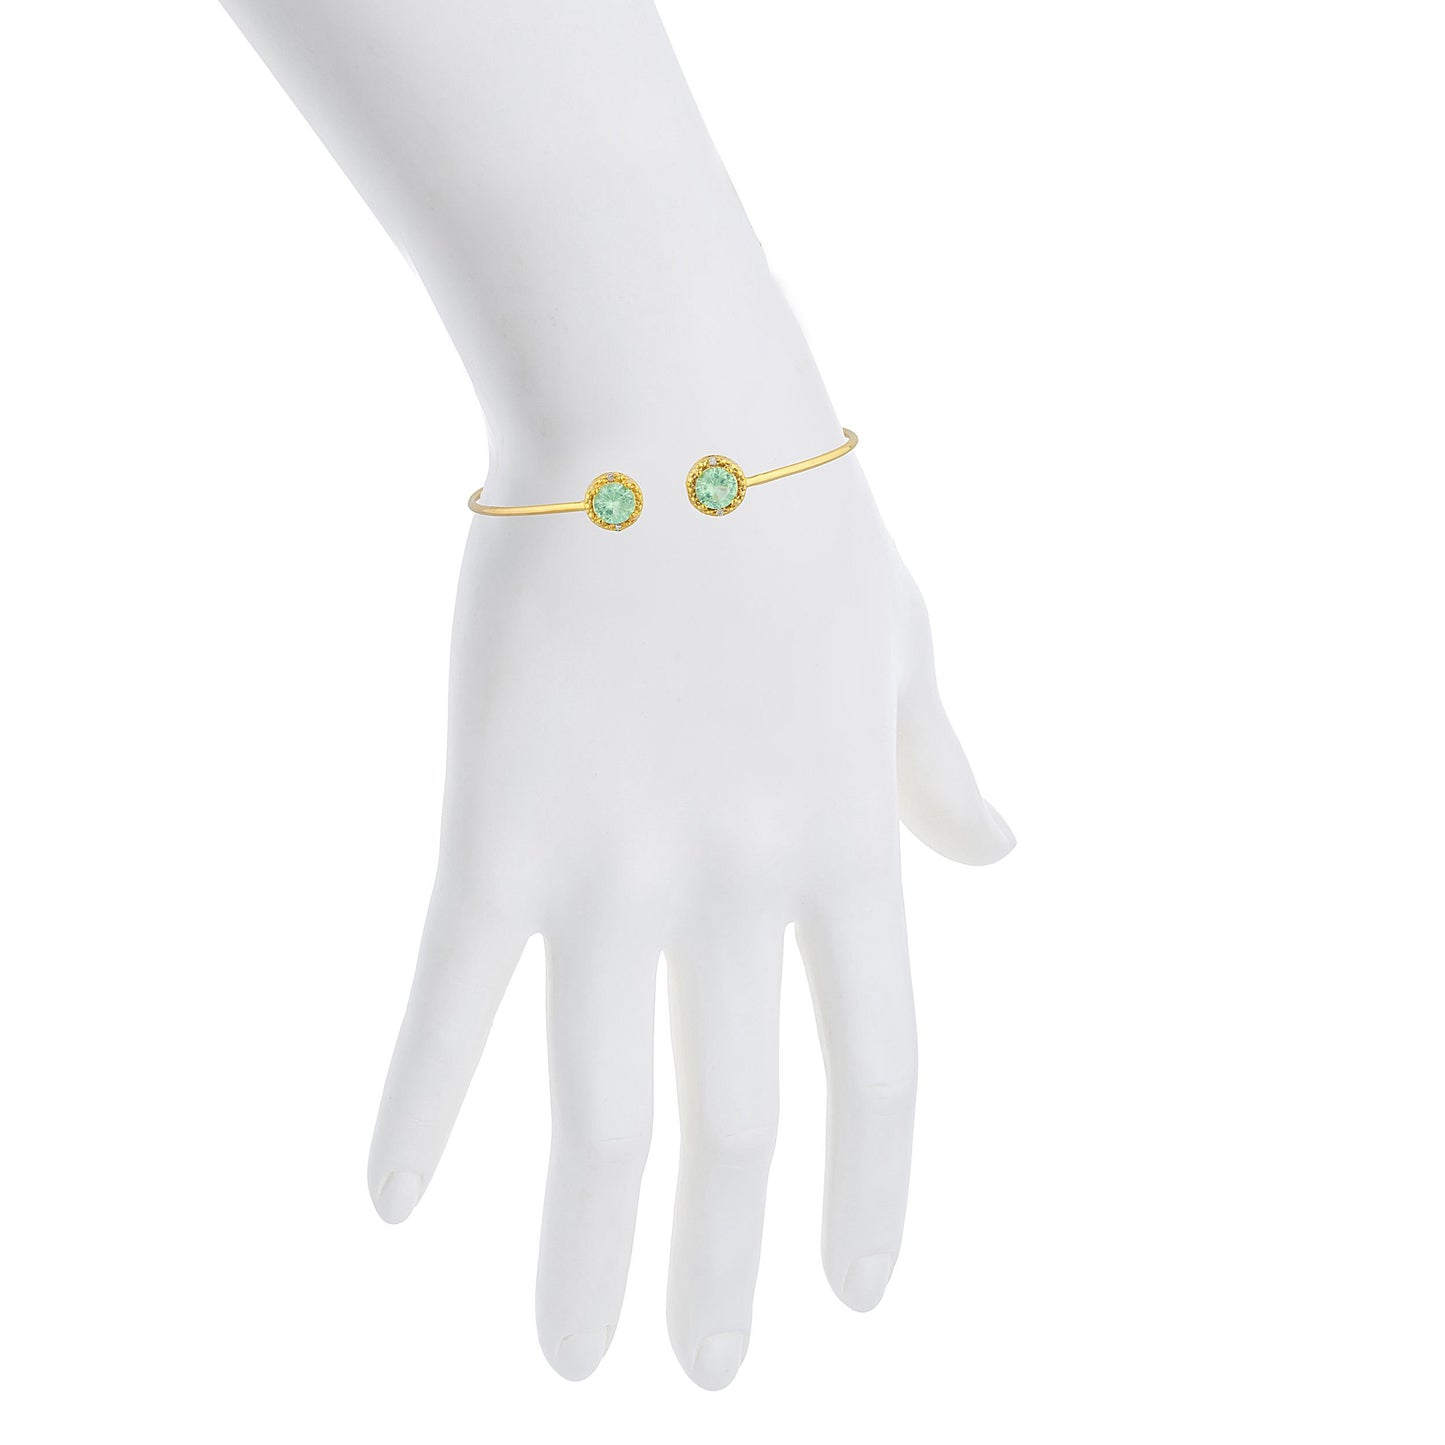 14Kt Gold Green Sapphire & Diamond Round Bangle Bracelet